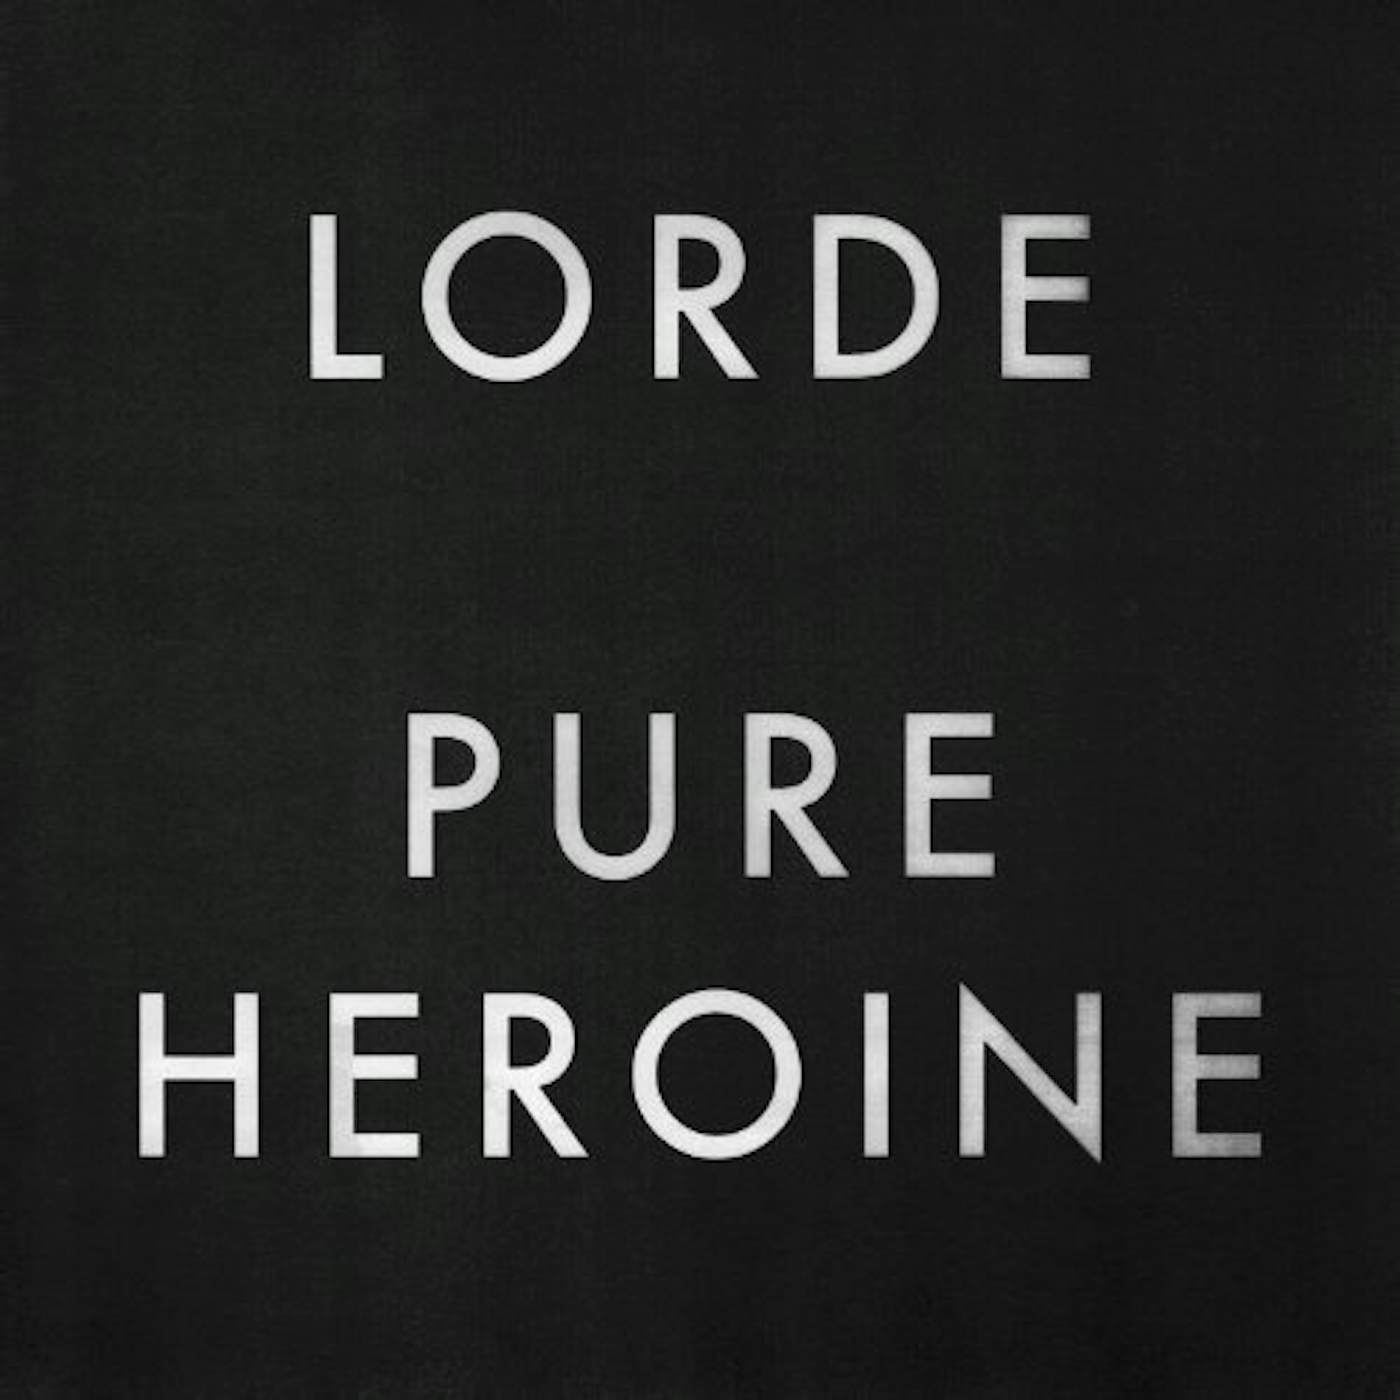 Lorde Pure Heroine Vinyl Record